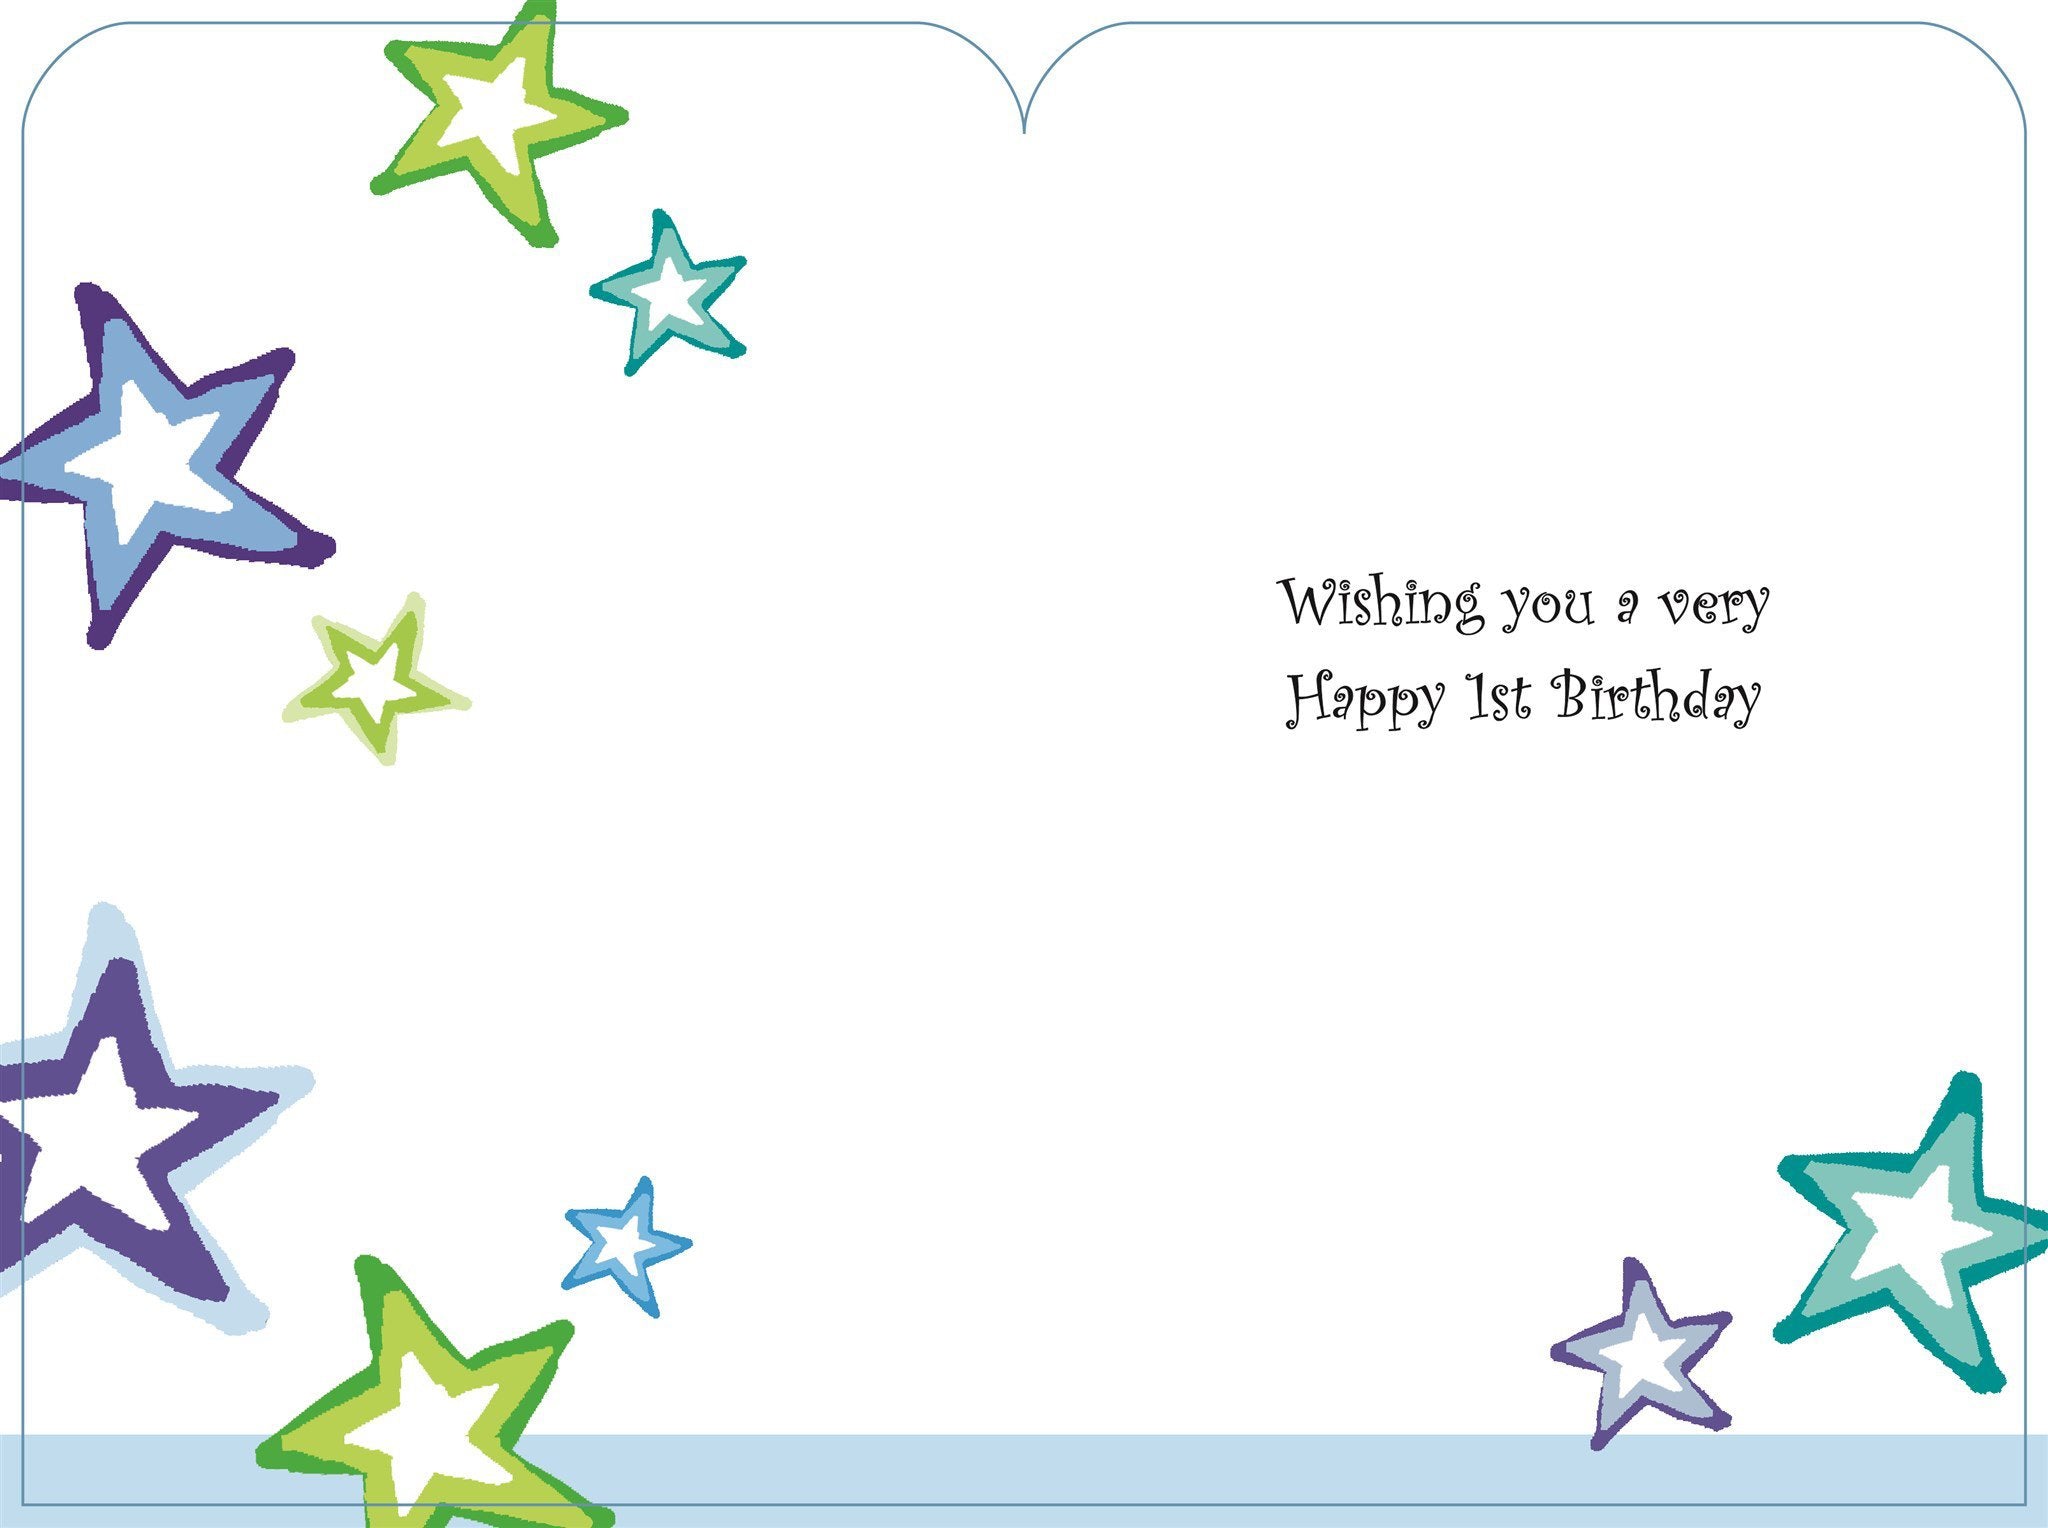 Inside of 1st Birthday Teddy Greetings Card